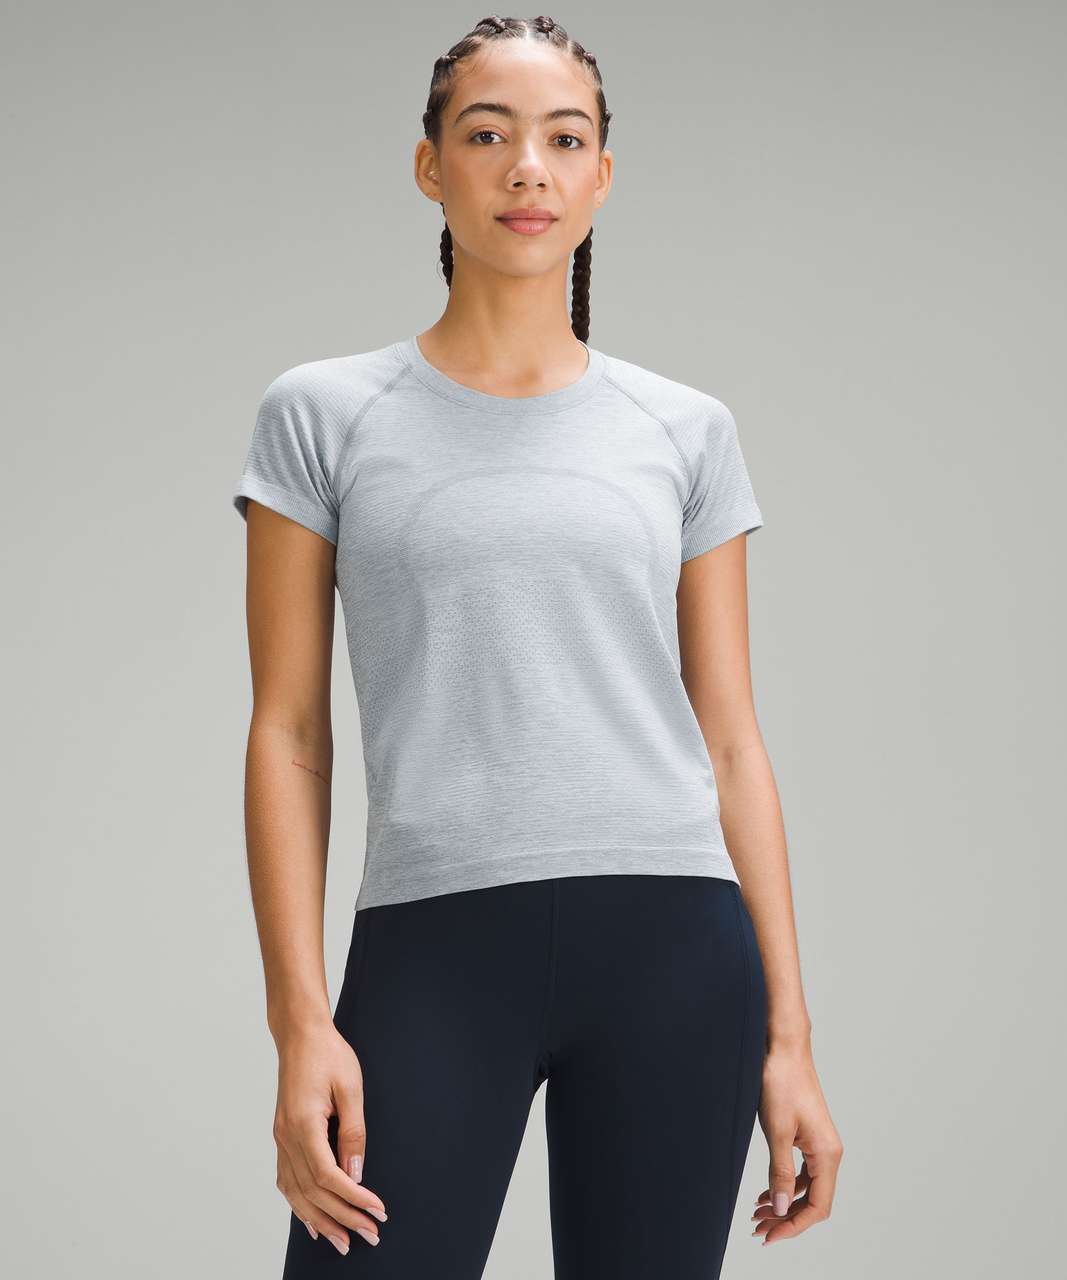 Lululemon Swiftly Tech Short-Sleeve Shirt 2.0 *Race Length - Chambray / Powder Blue